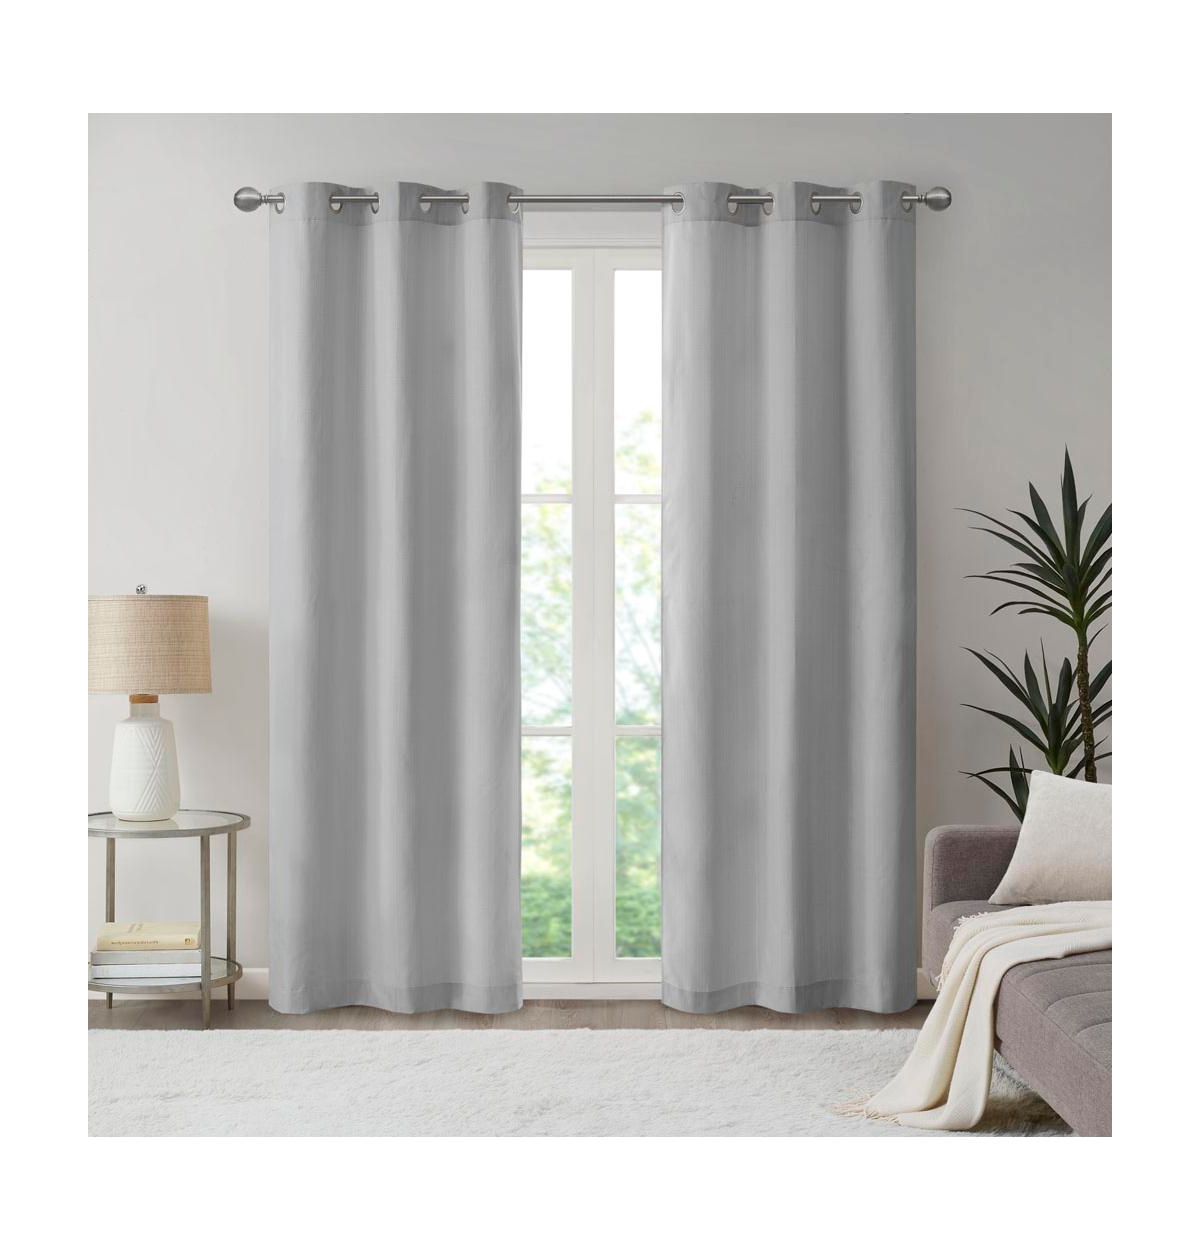 Galen Basketweave Room Darkening Curtain Panel Pair, 40"W x 84"L, 2 Pack - Grey